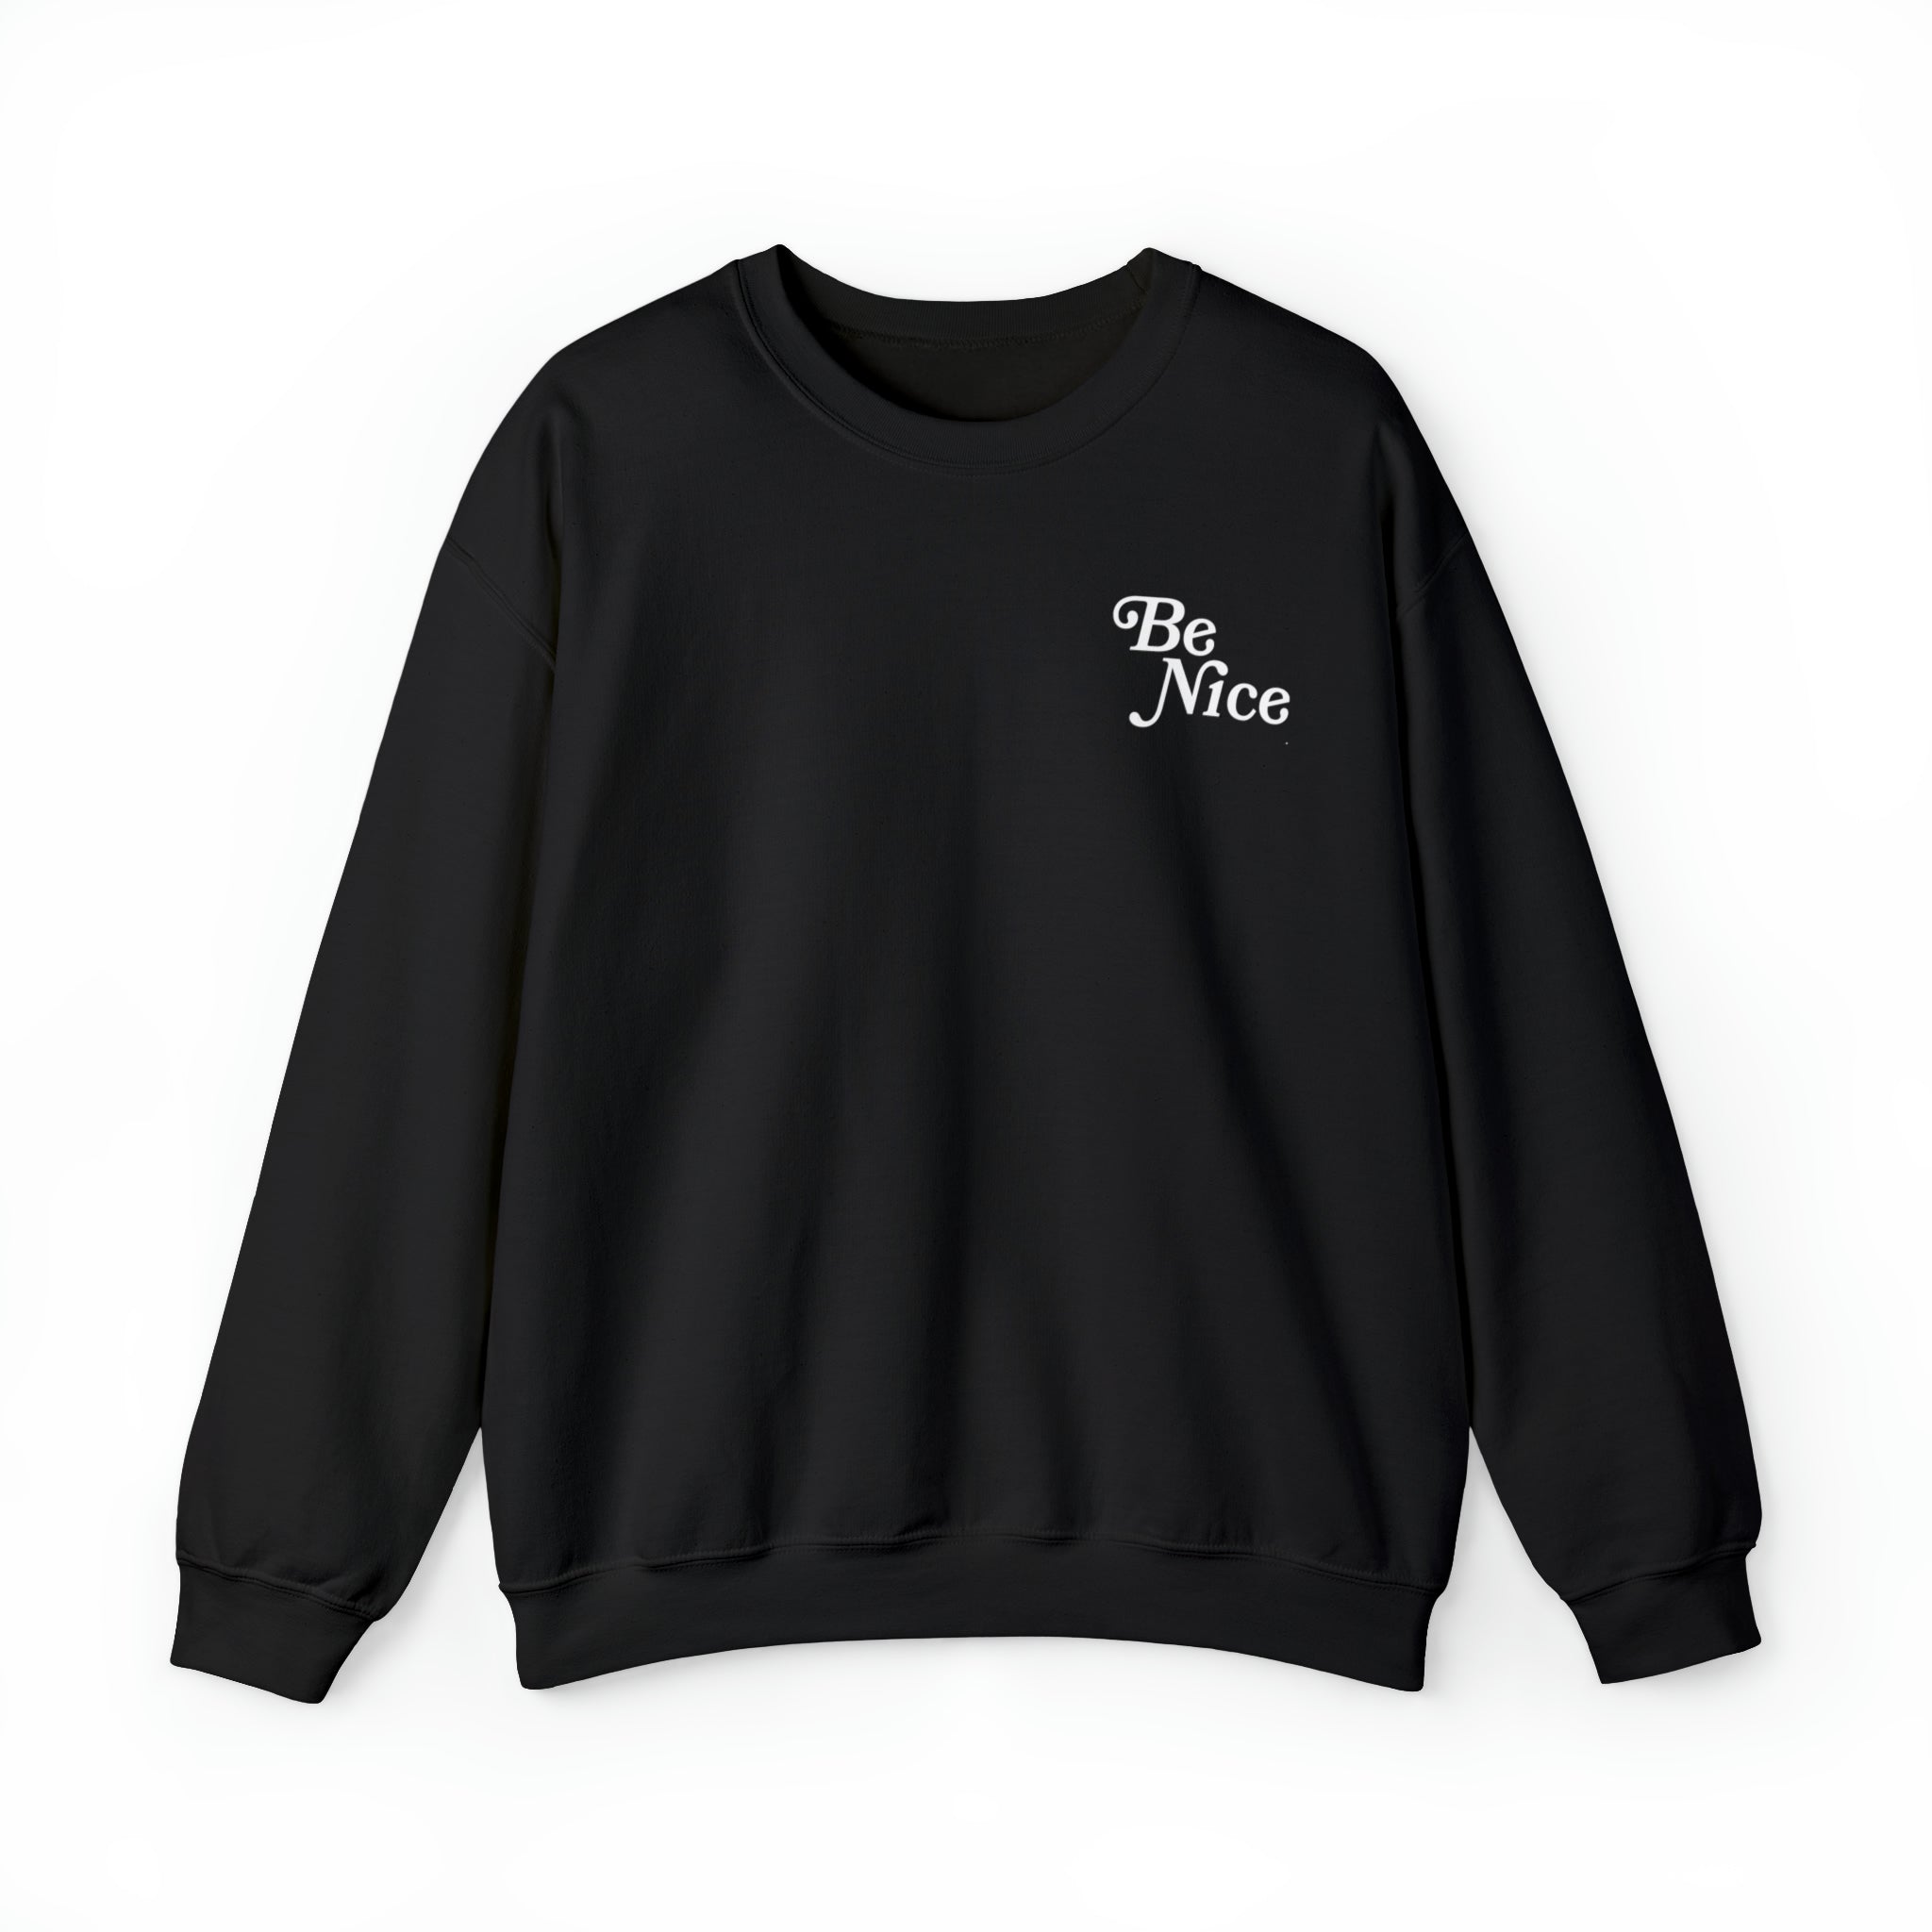 Stylish dark-colored crewneck sweatshirt with Be Nice or Kick Rocks design